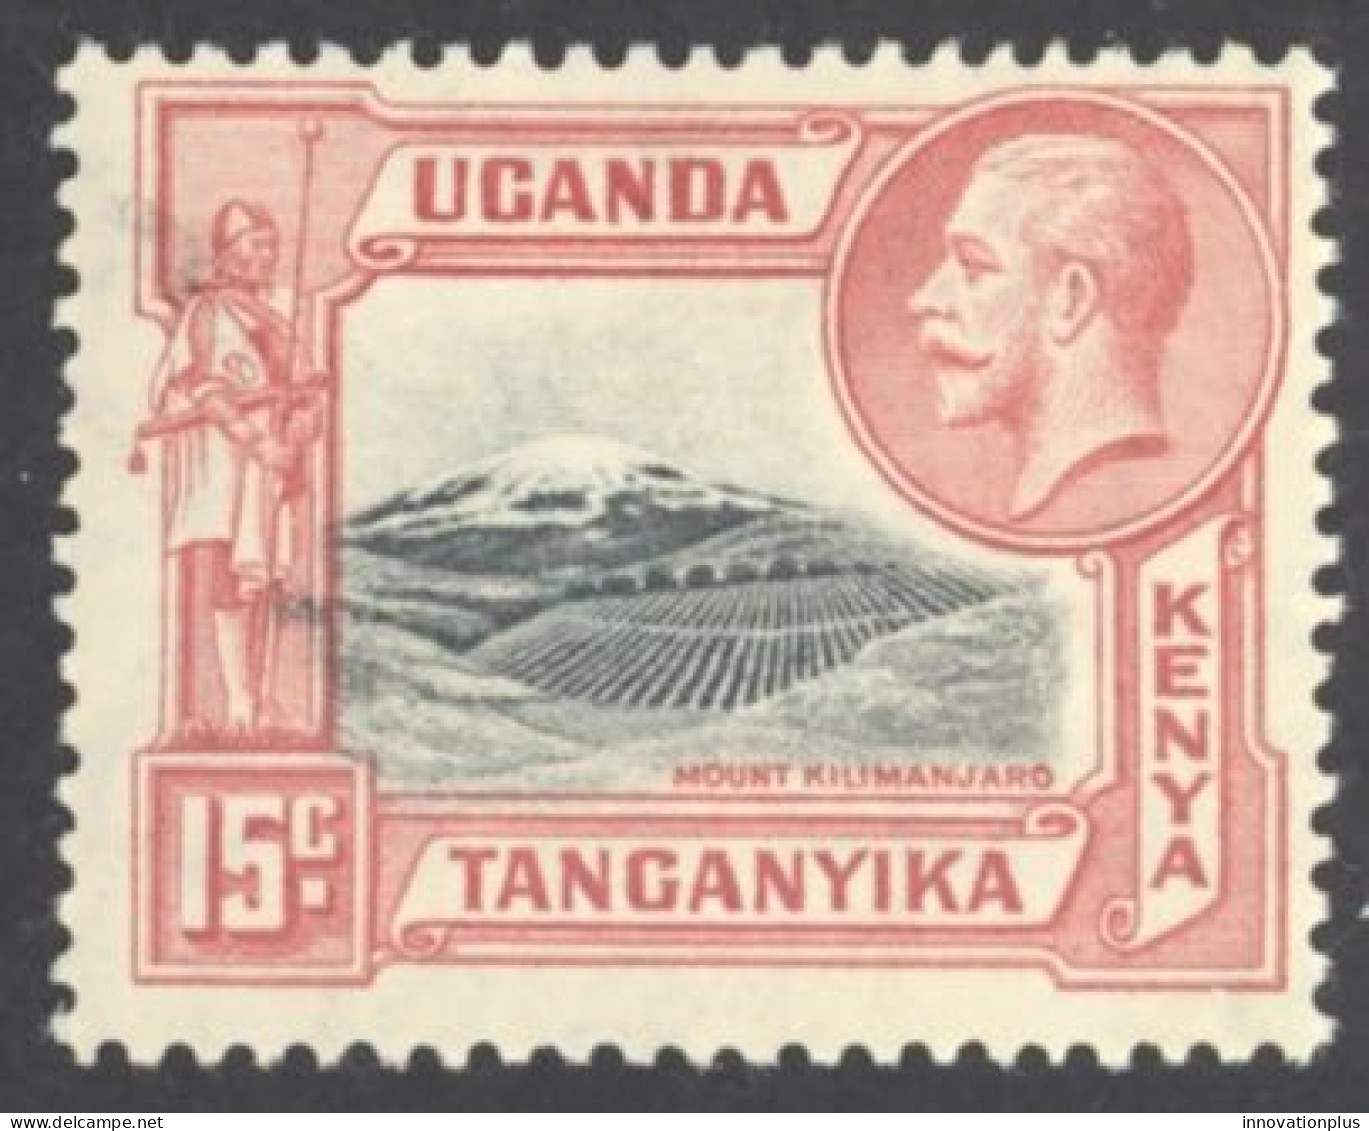 Kenya, Uganda, Tanzania Sc# 49 MH 1935 15c Definitives - Kenya, Oeganda & Tanzania